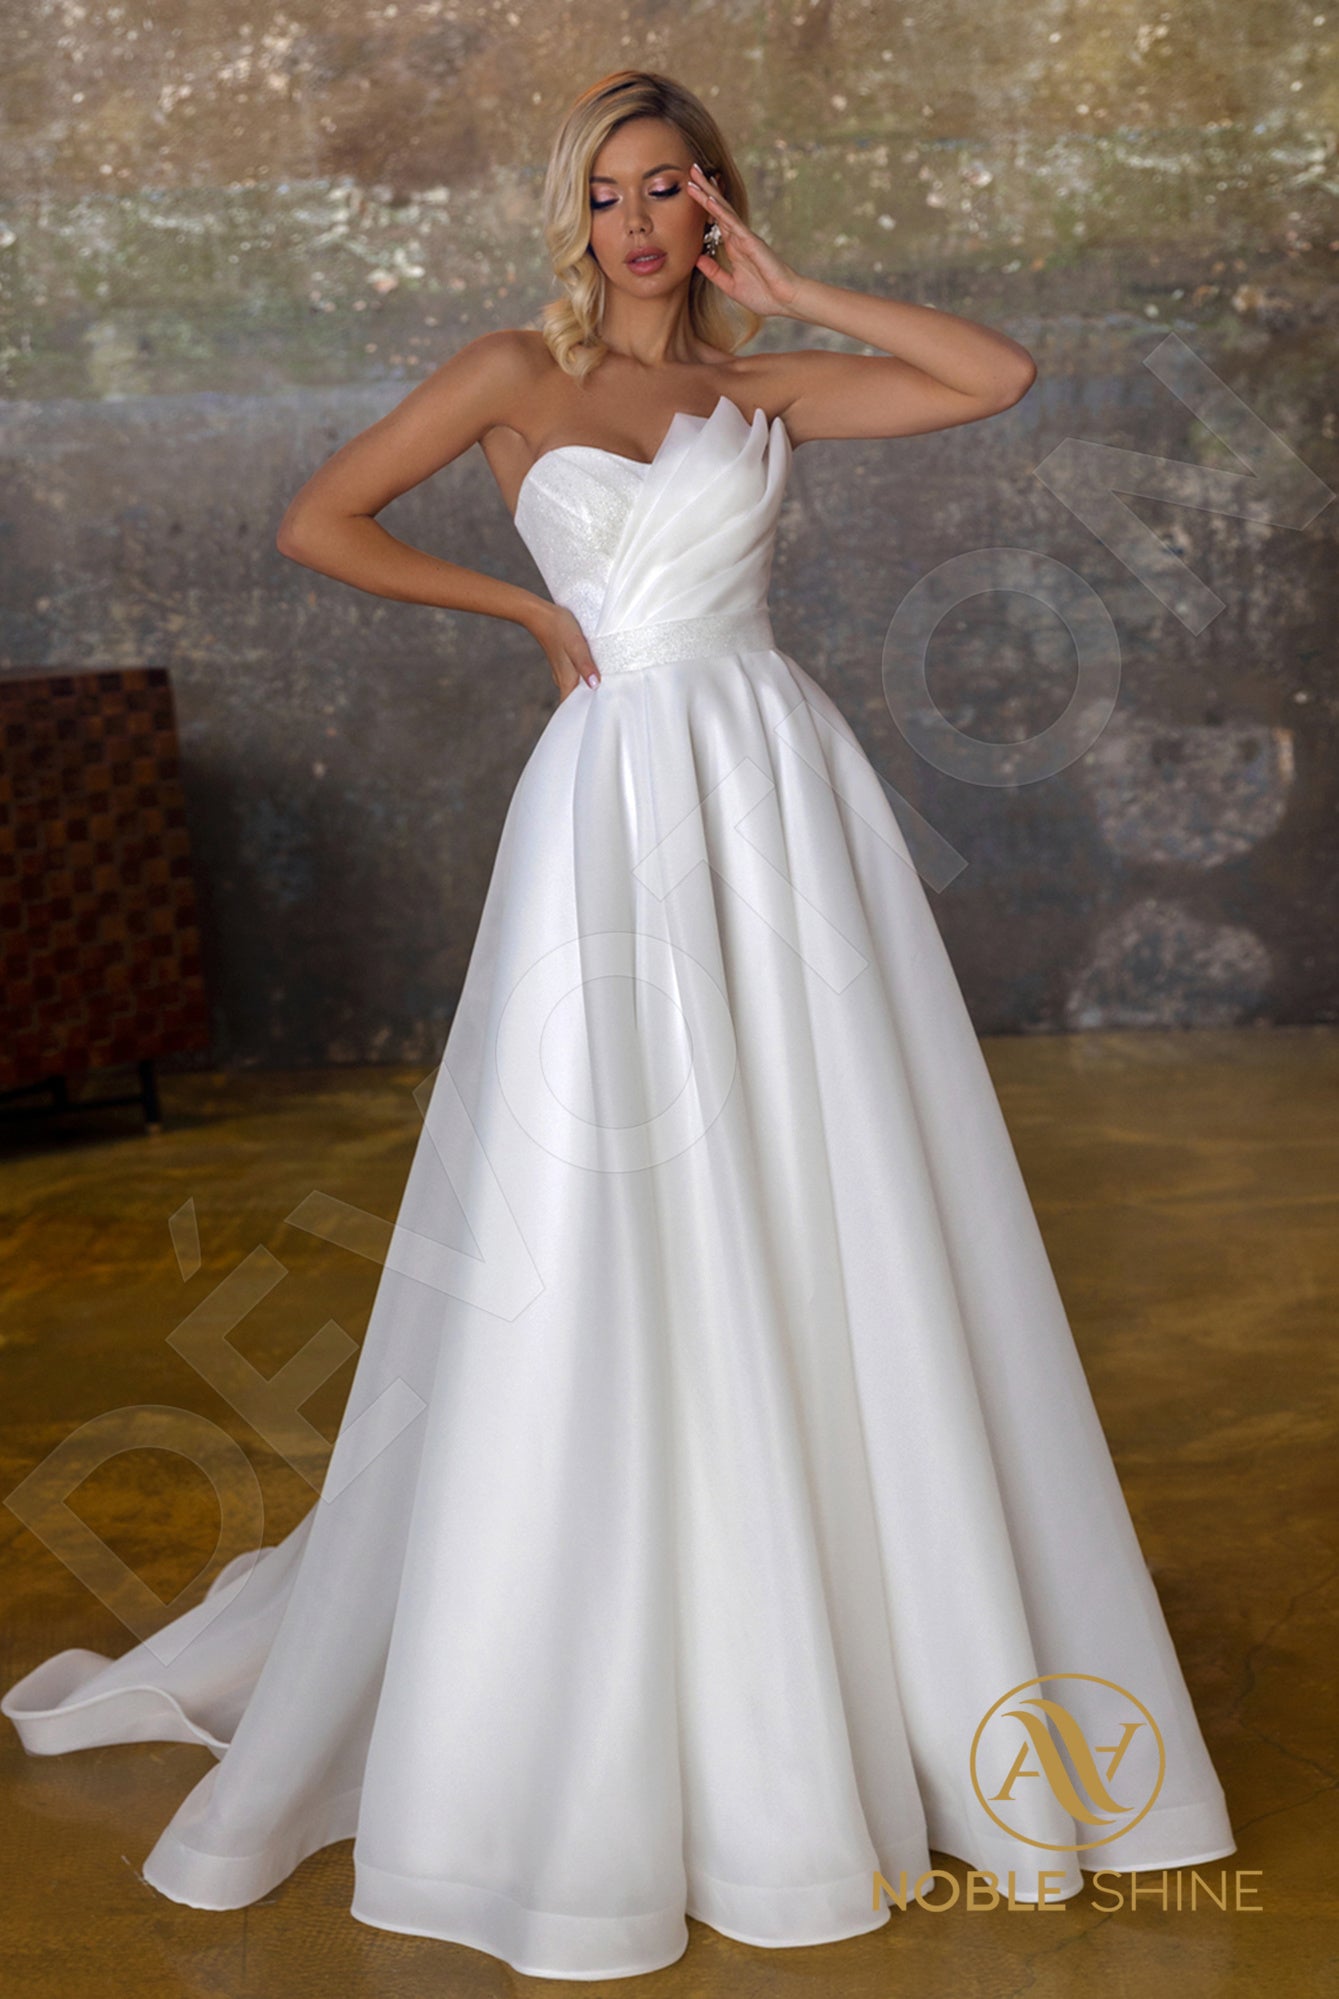 Komina Open back A-line Strapless Wedding Dress Front